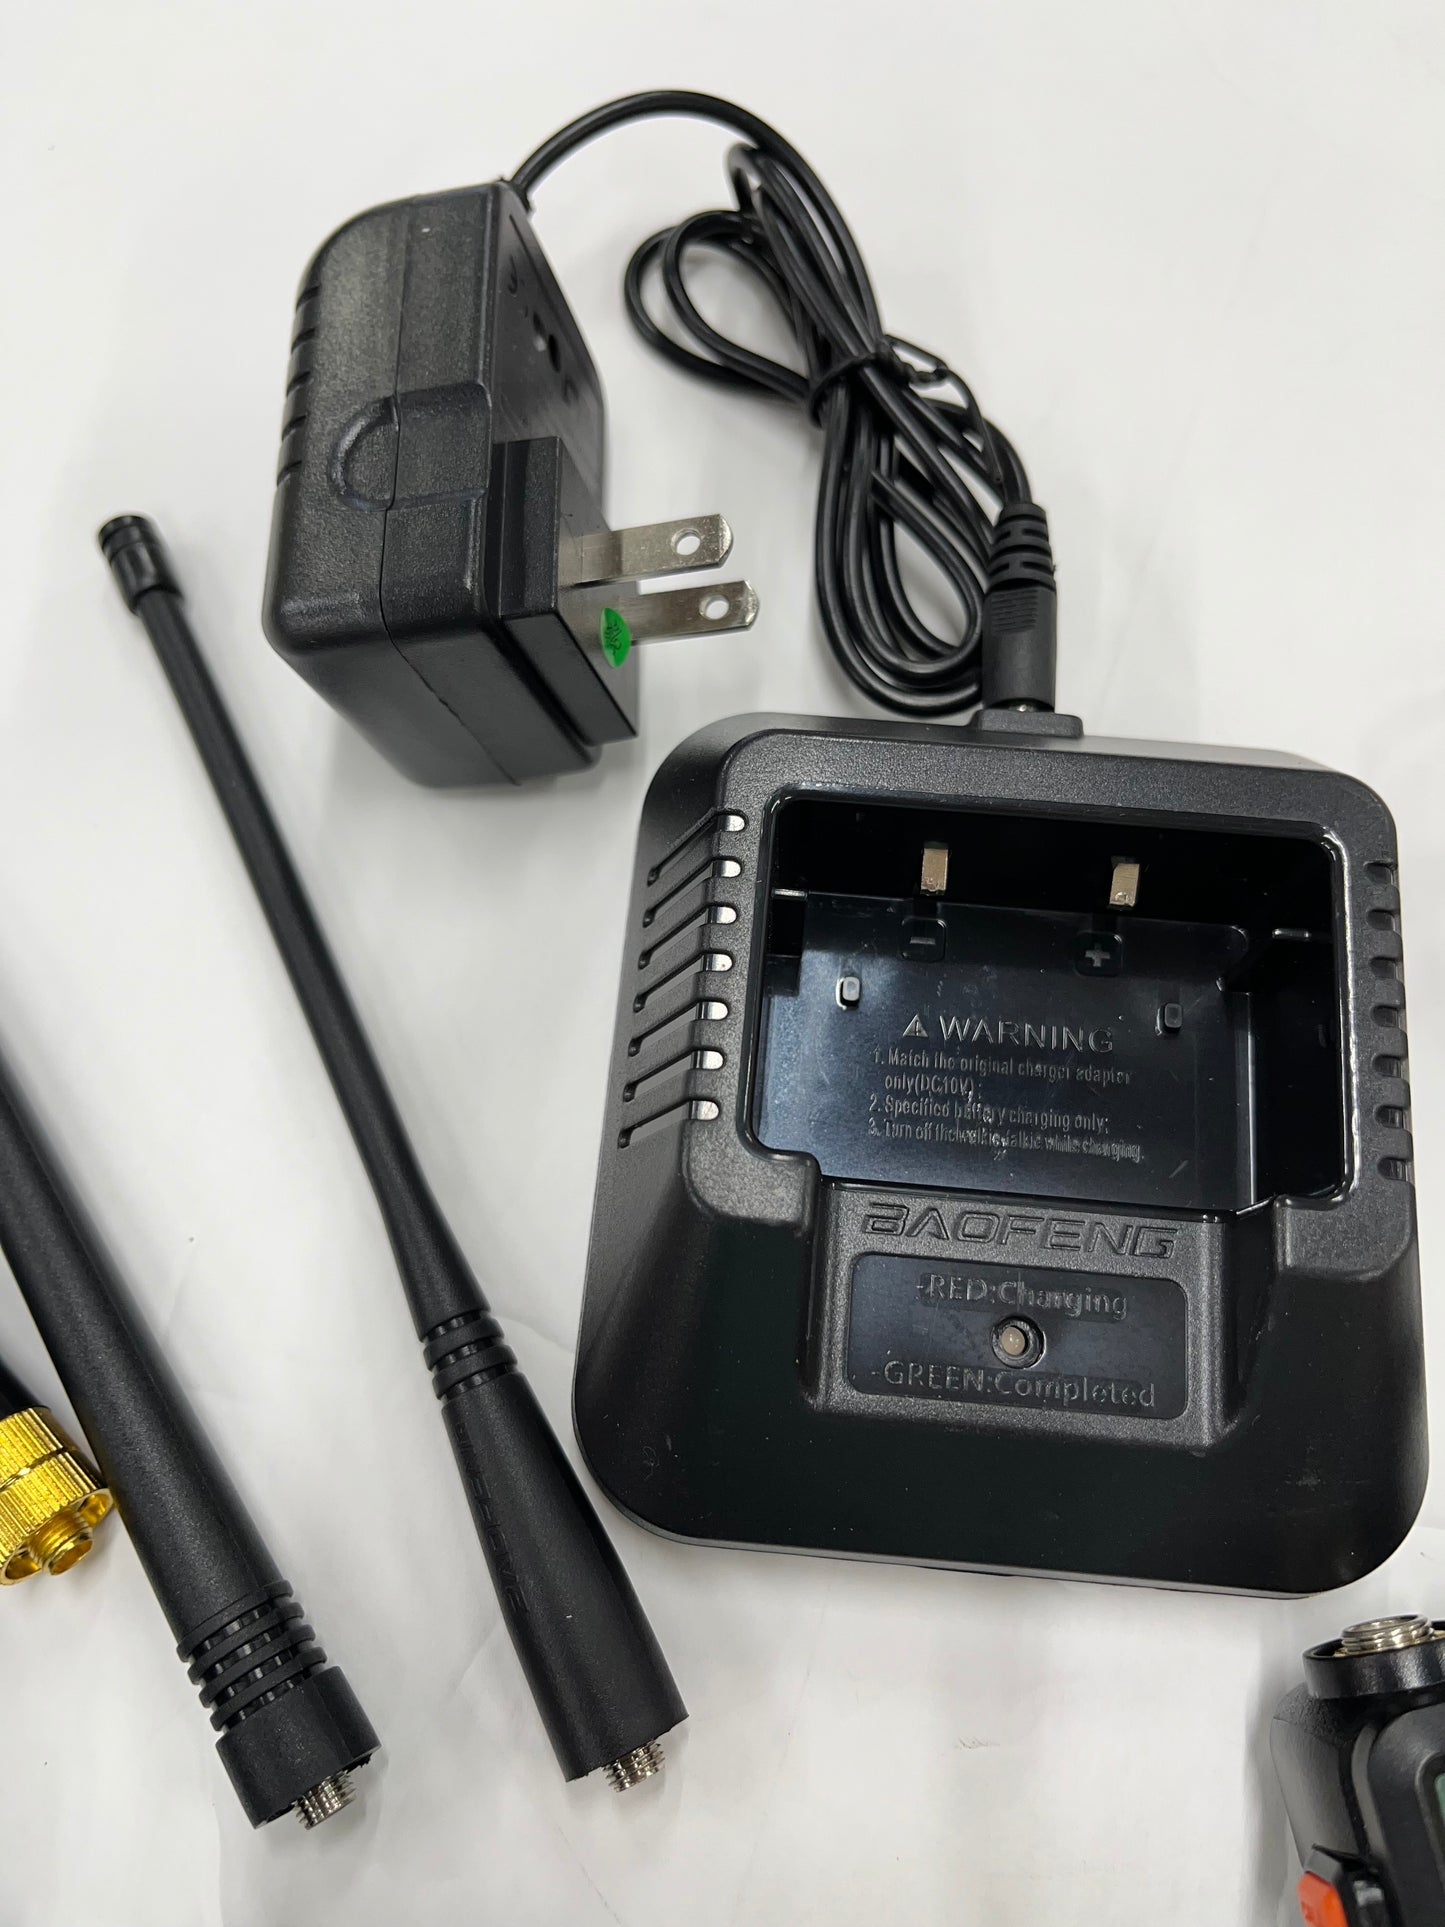 UHF-VHF HandHeld Baofeng Radio Package SPECIAL BUY UV-5R